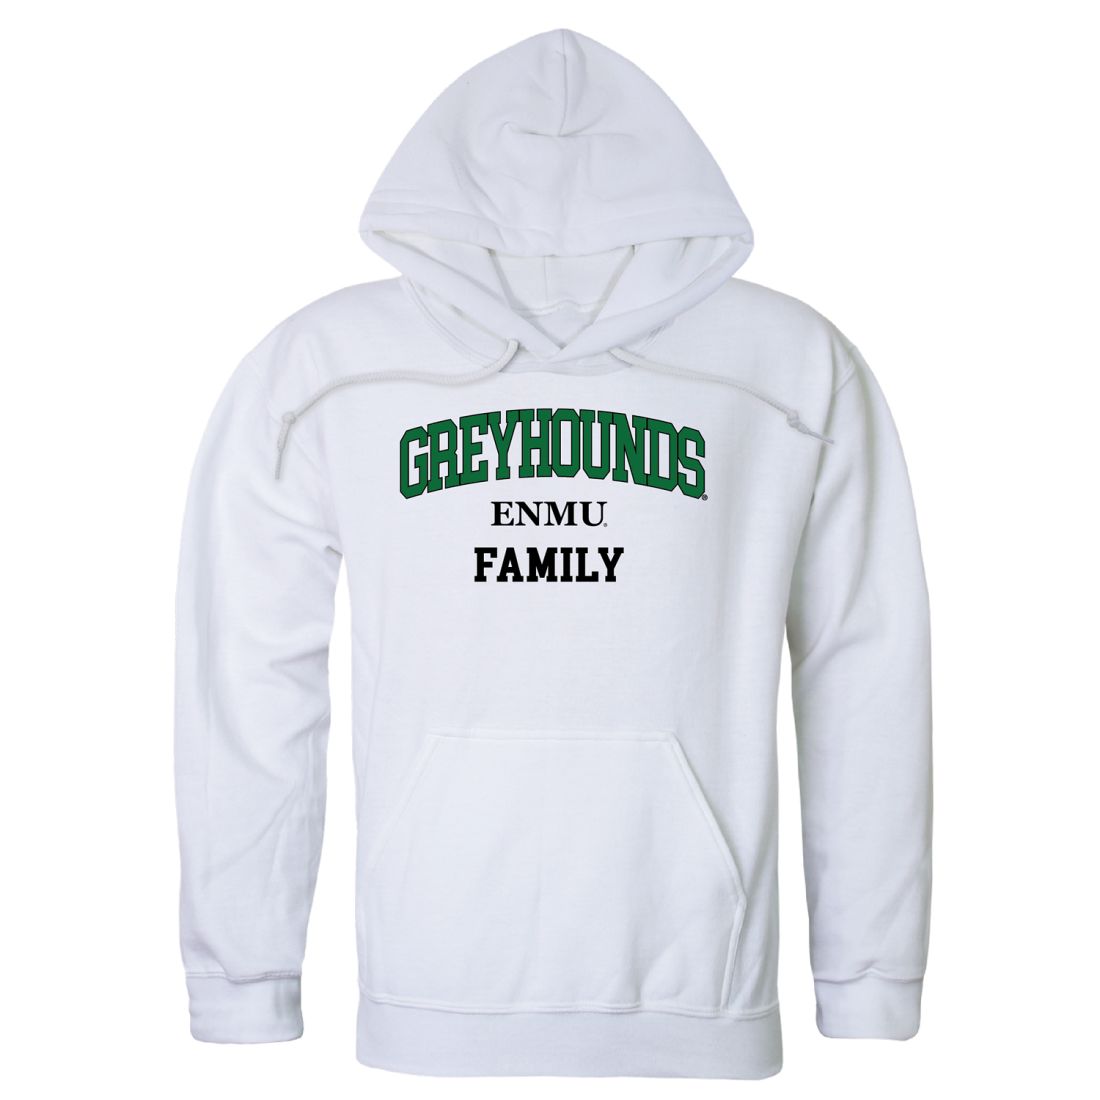 Eastern New Mexico University Greyhounds Family Hoodie Sweatshirts